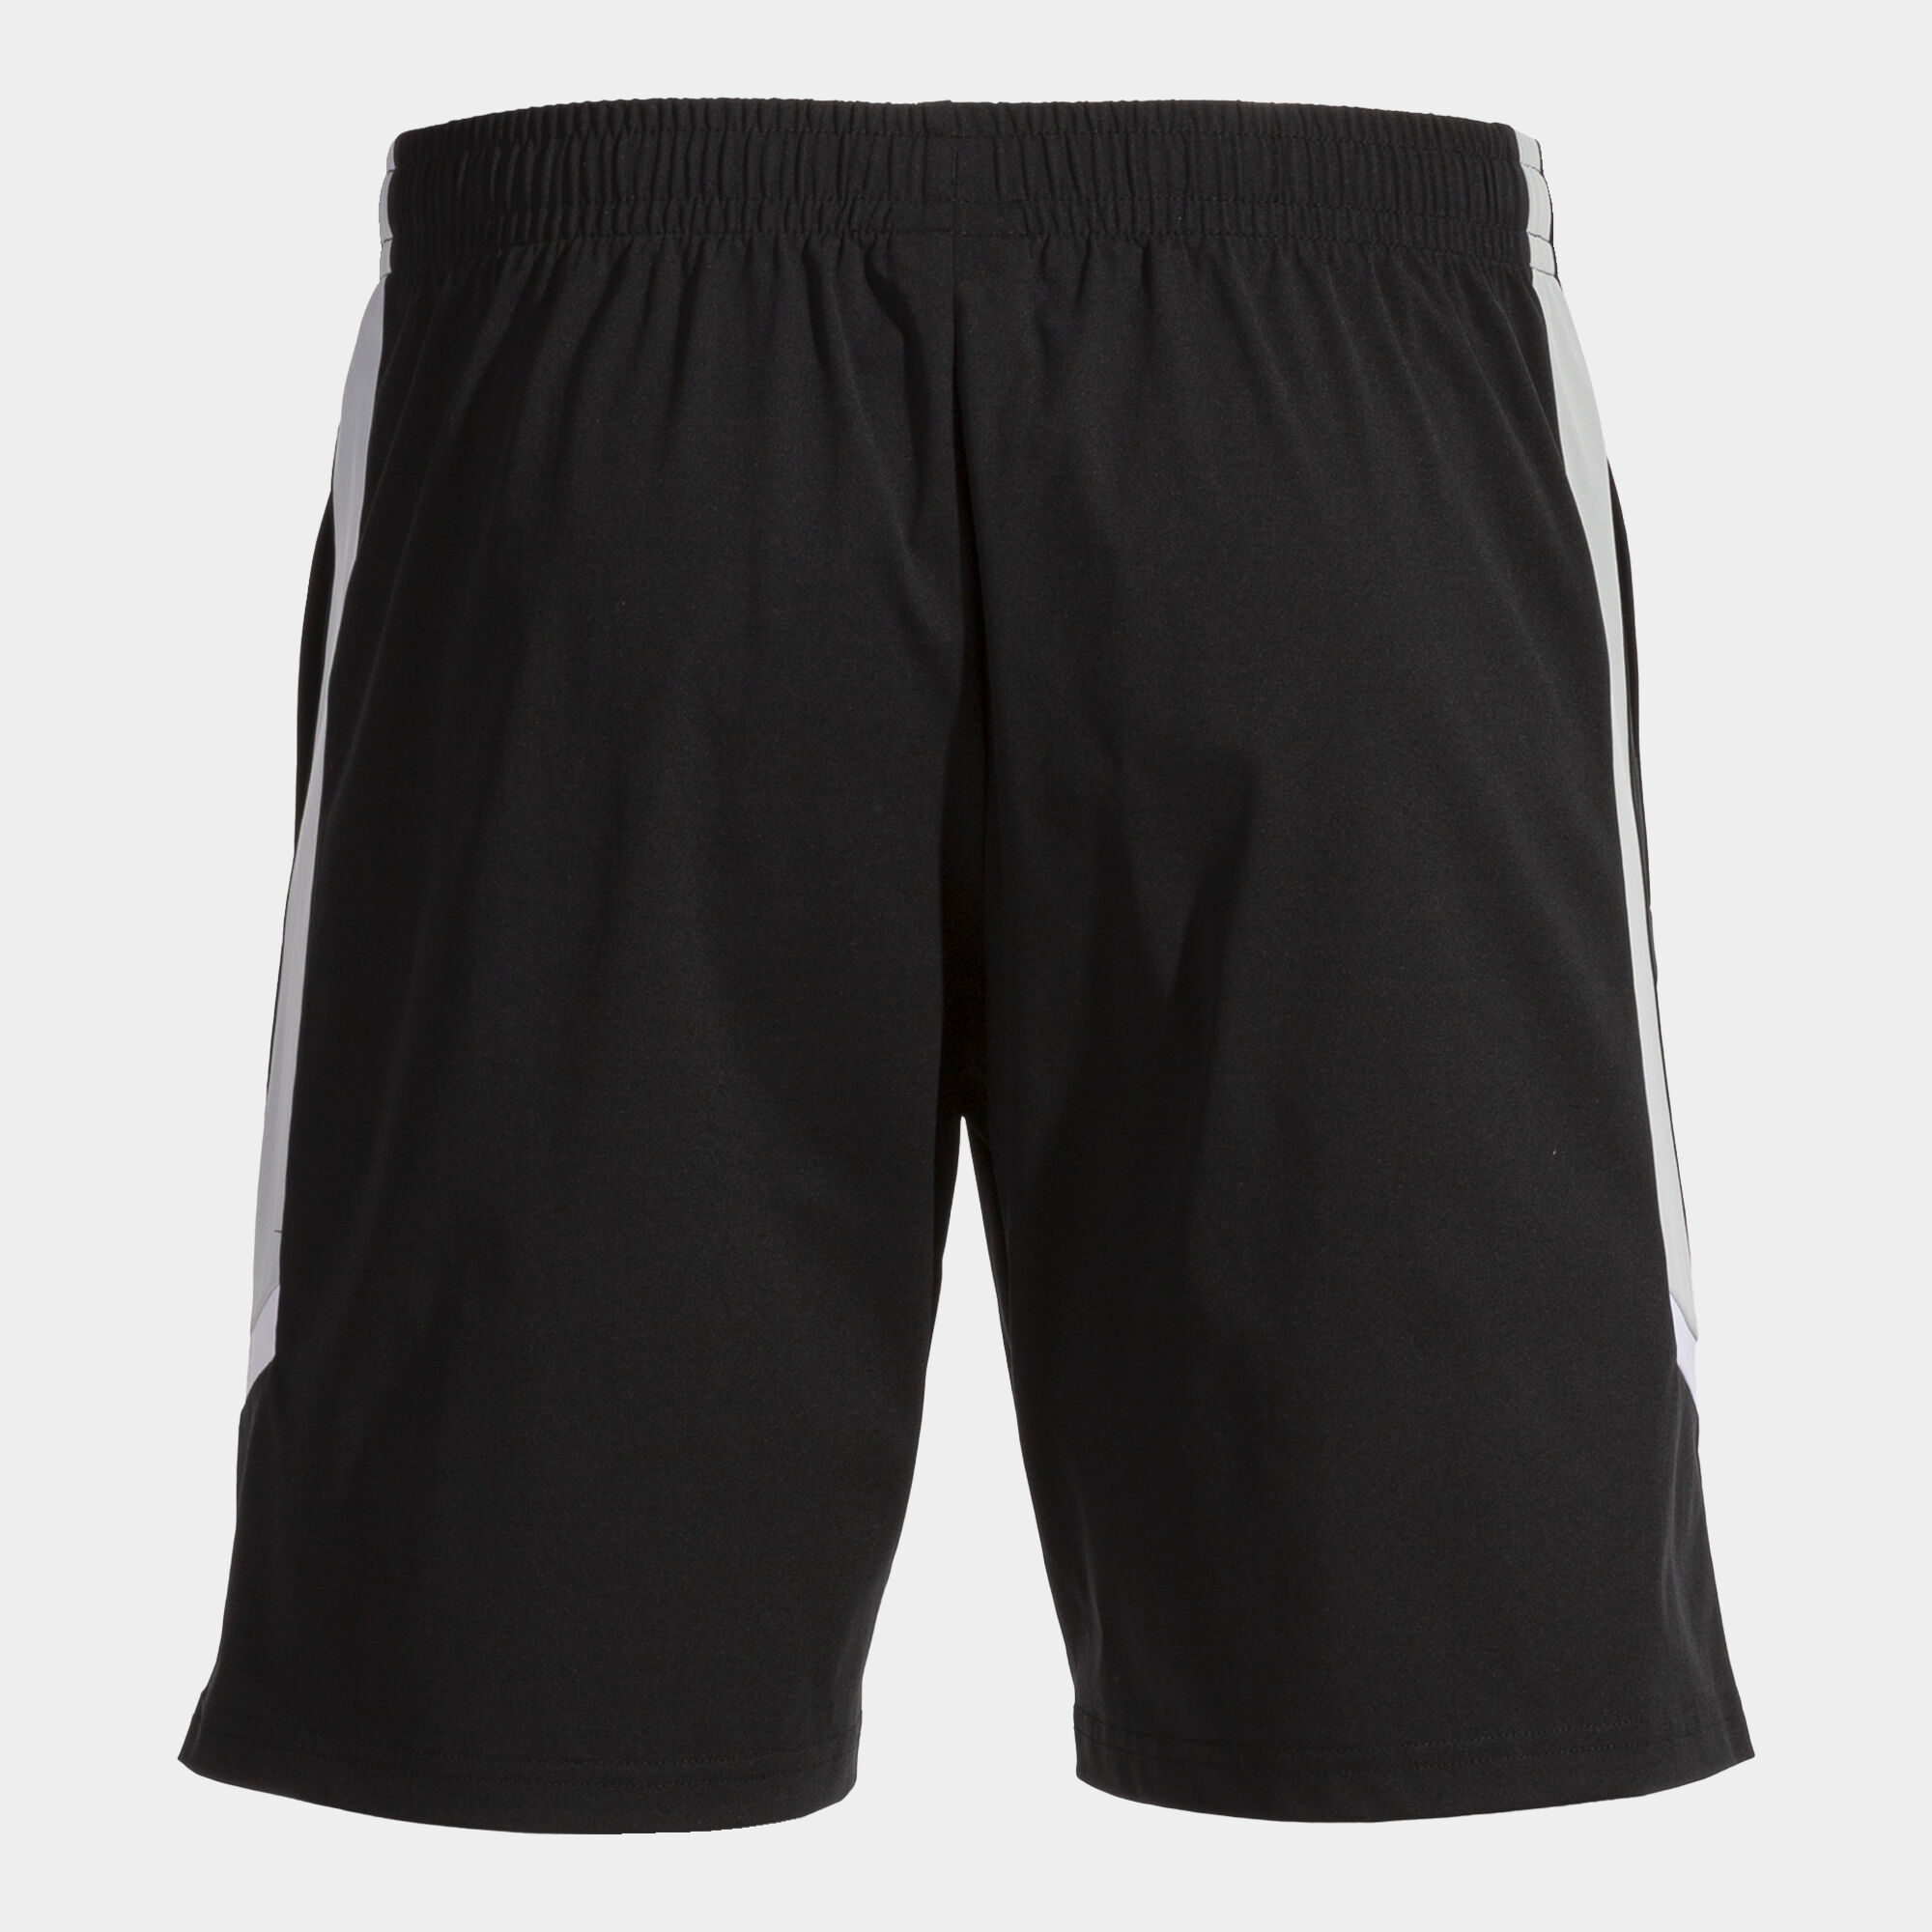 Bermuda shorts man Montreal II black gray